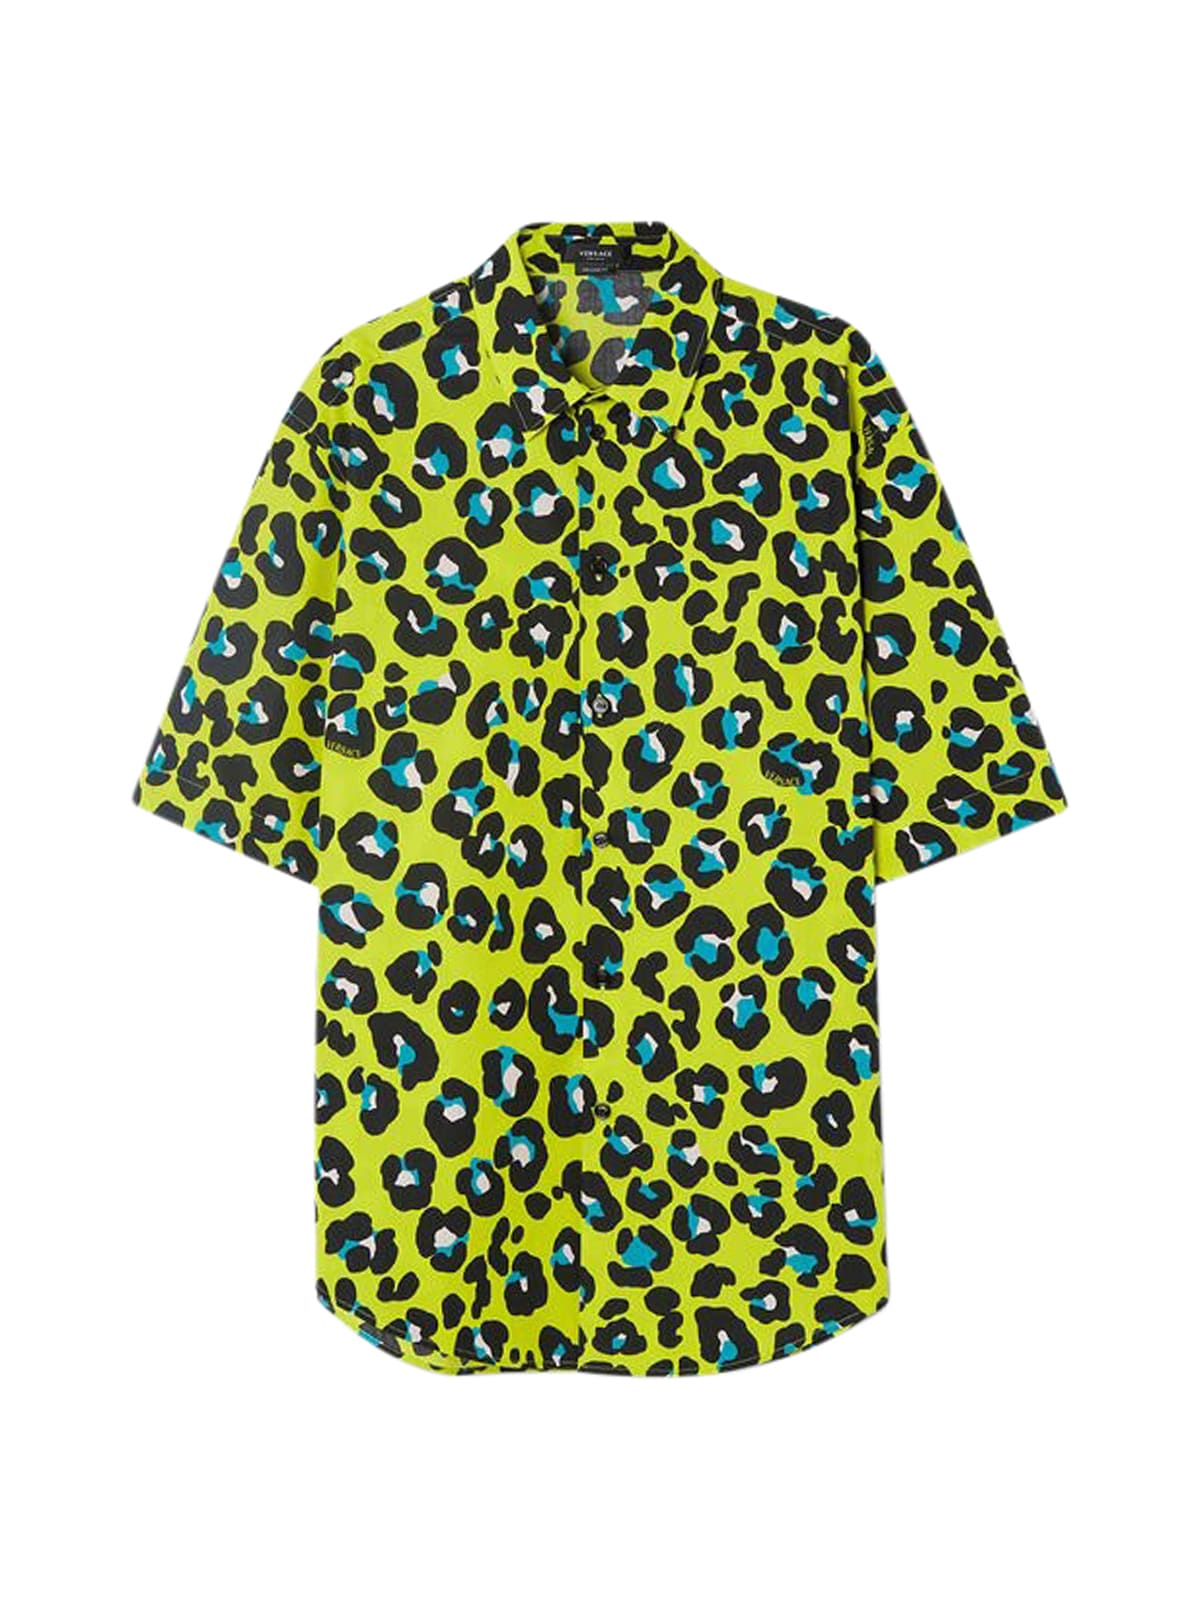 Versace Informal Shirt Tessuto Popeline Cotone Stampa Leopard Allover